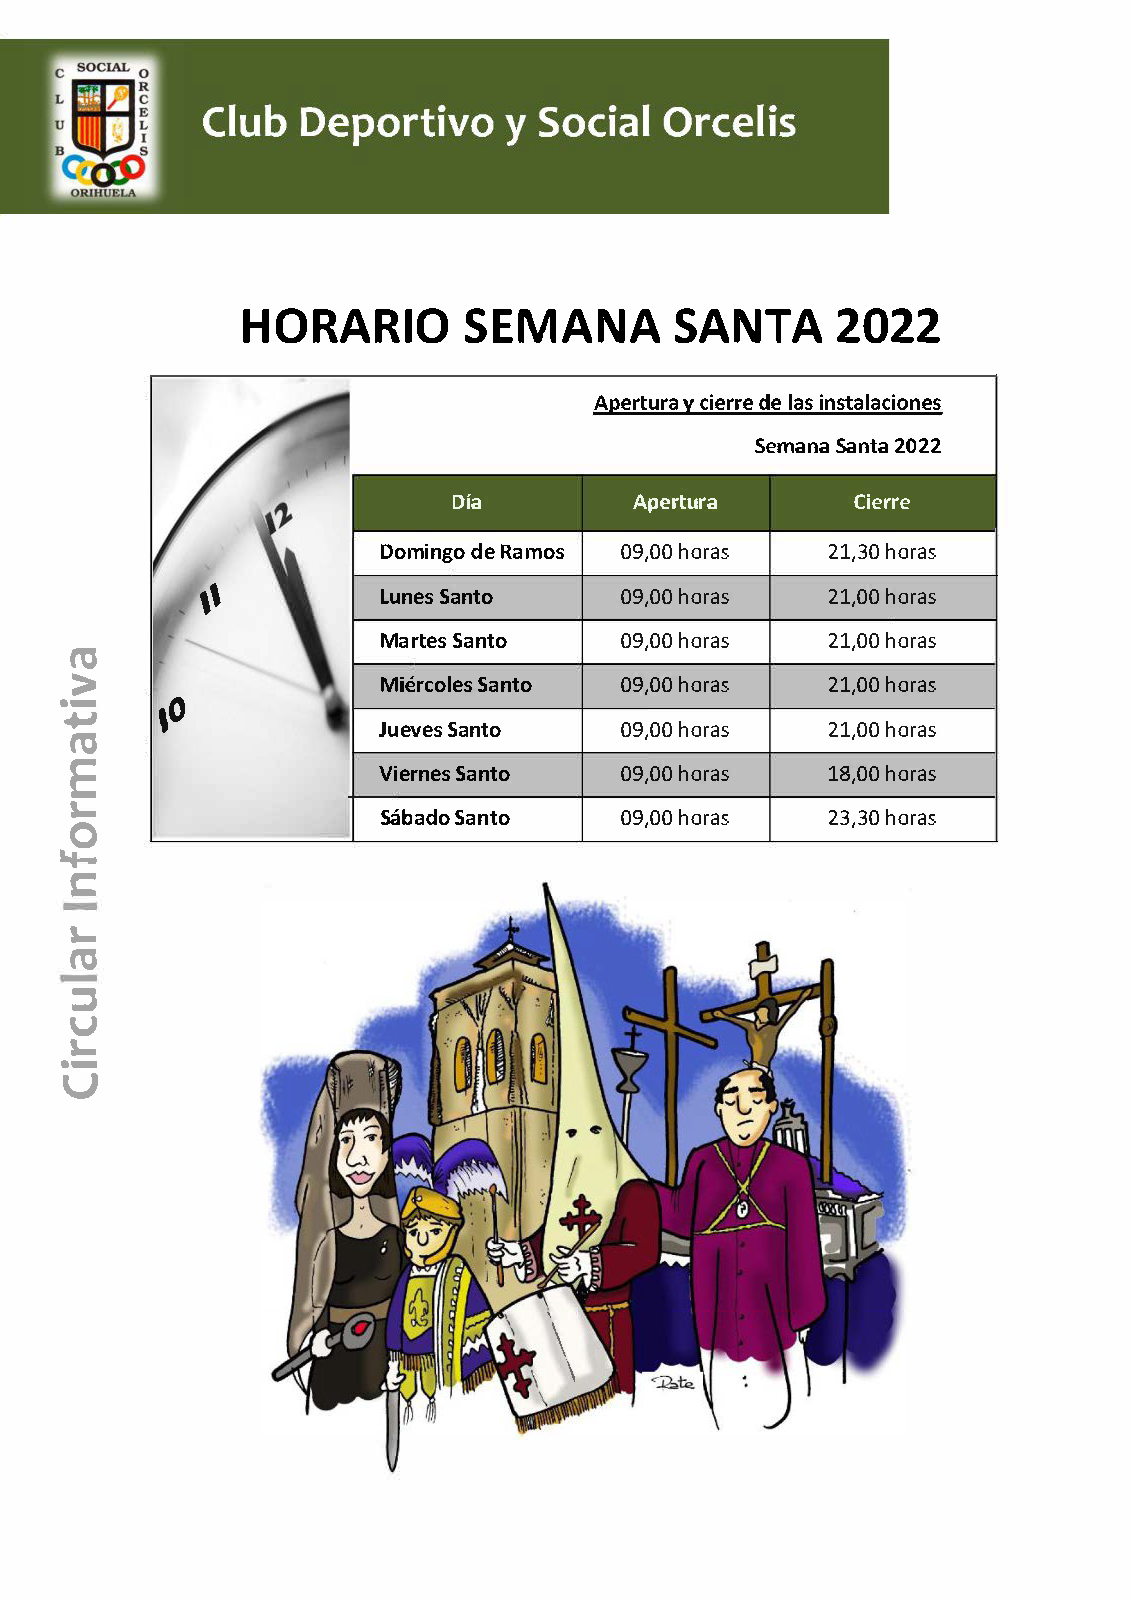 HORARIO SEMANA SANTA 2022